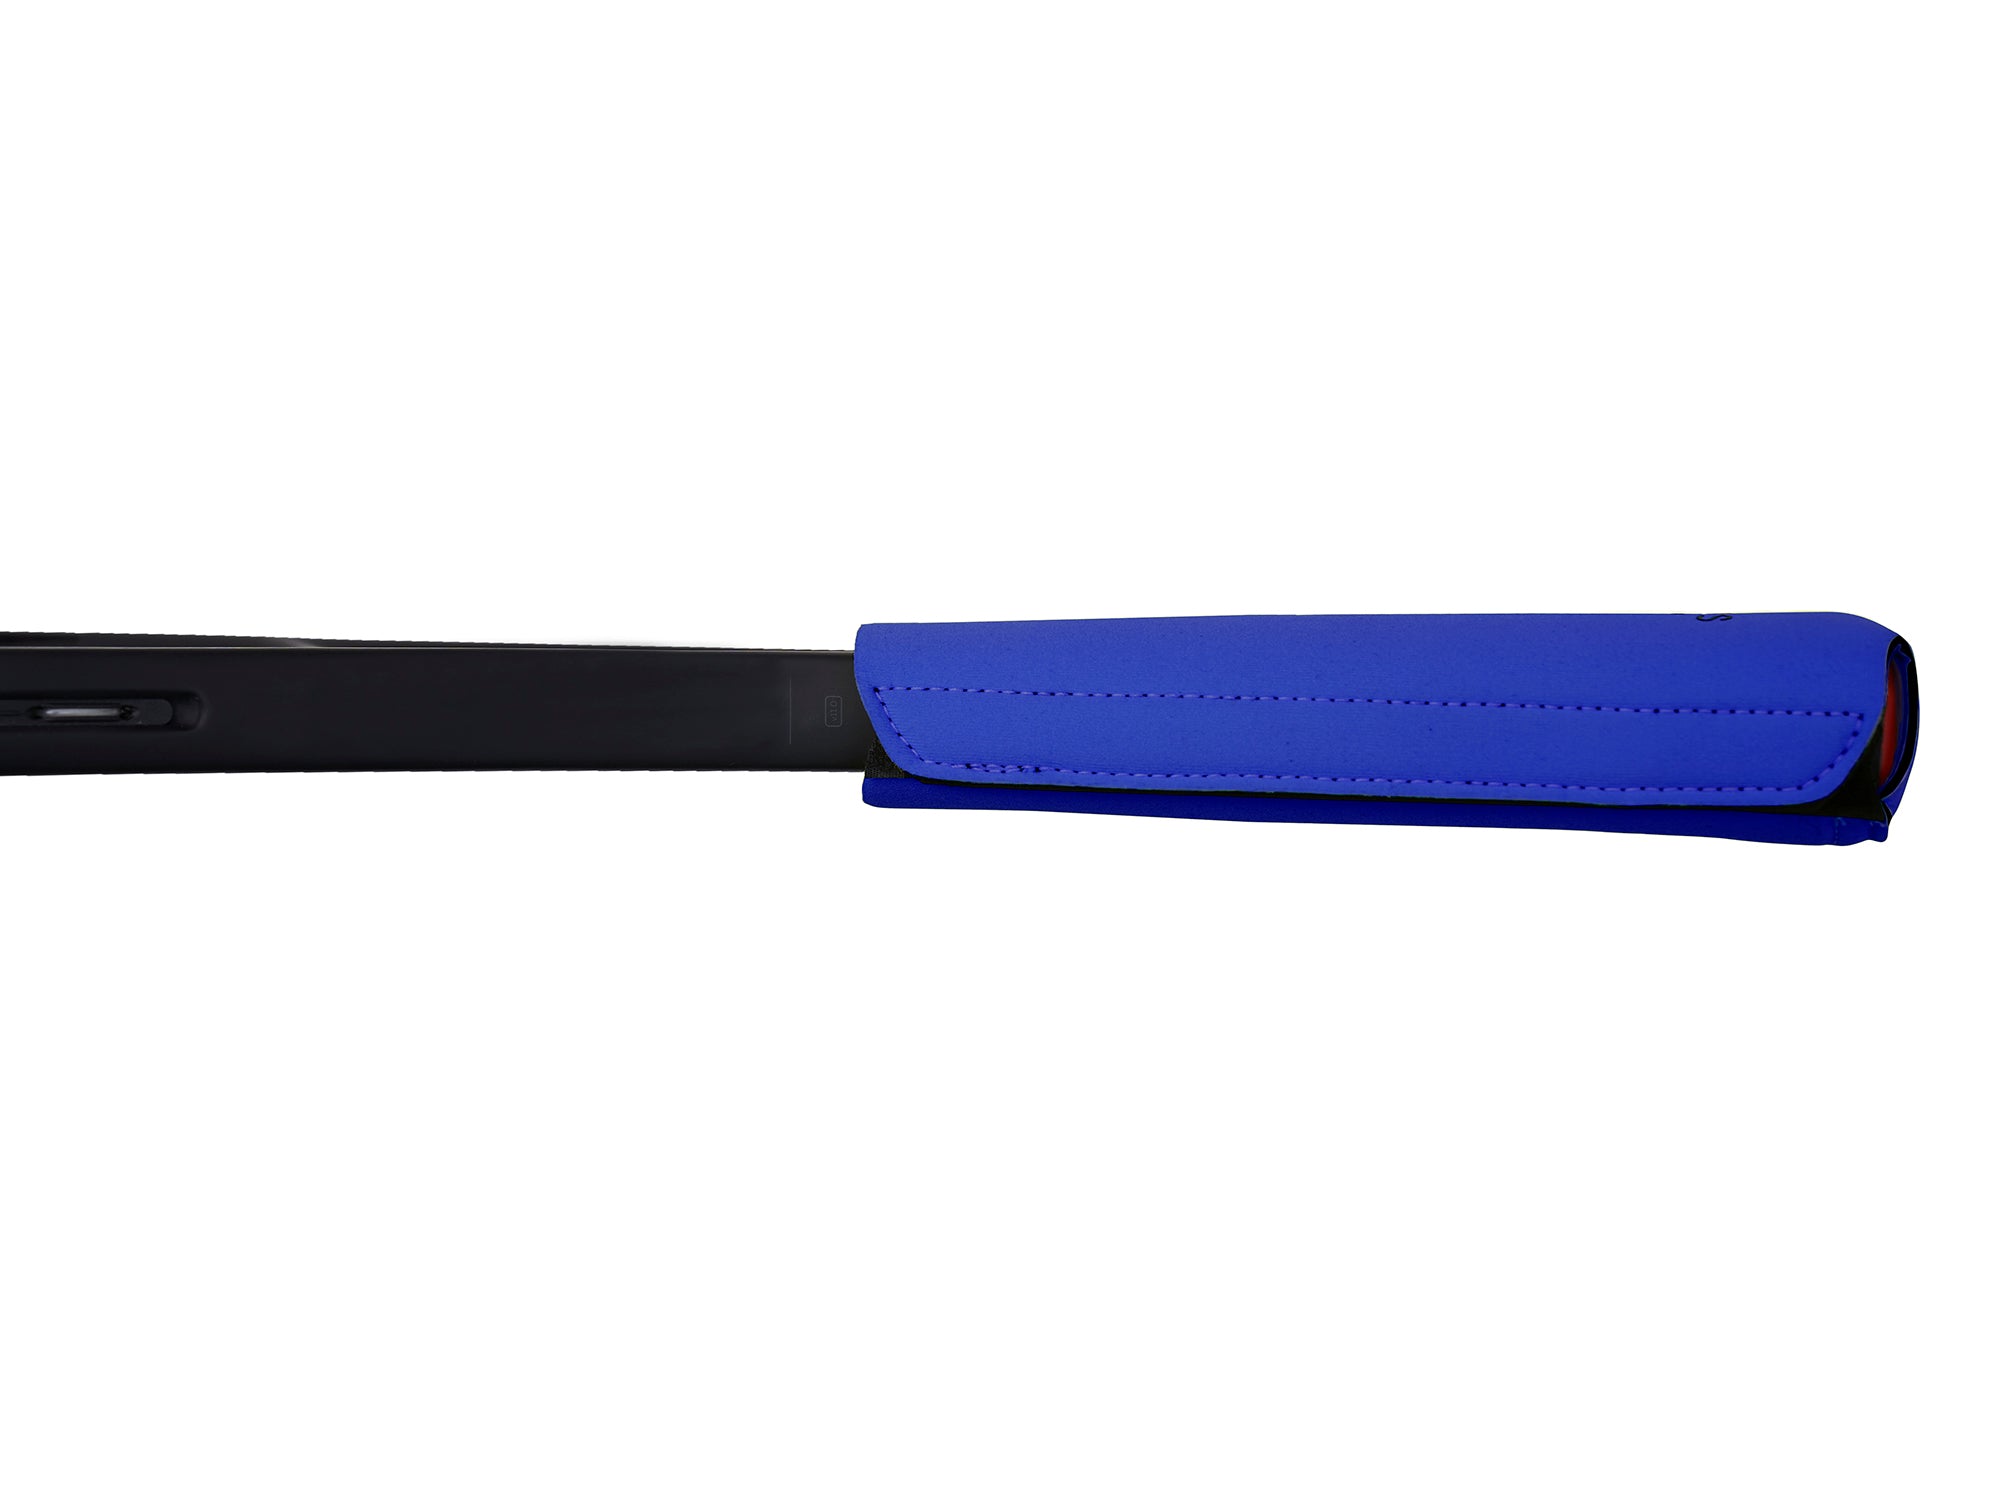 Epirus Neoprene Grip Cover (Blue) keeps your tennis grips tacky for longer